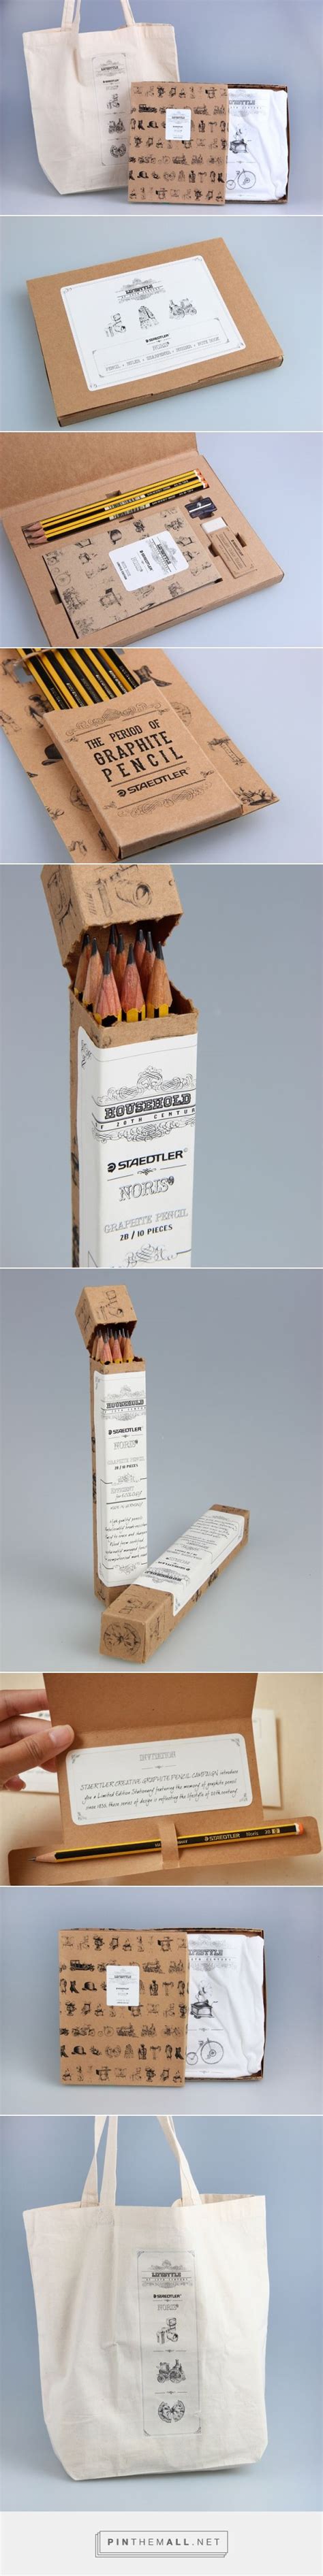 Staedtler Limited Edition Packaging Packaging Labels Brand Packaging